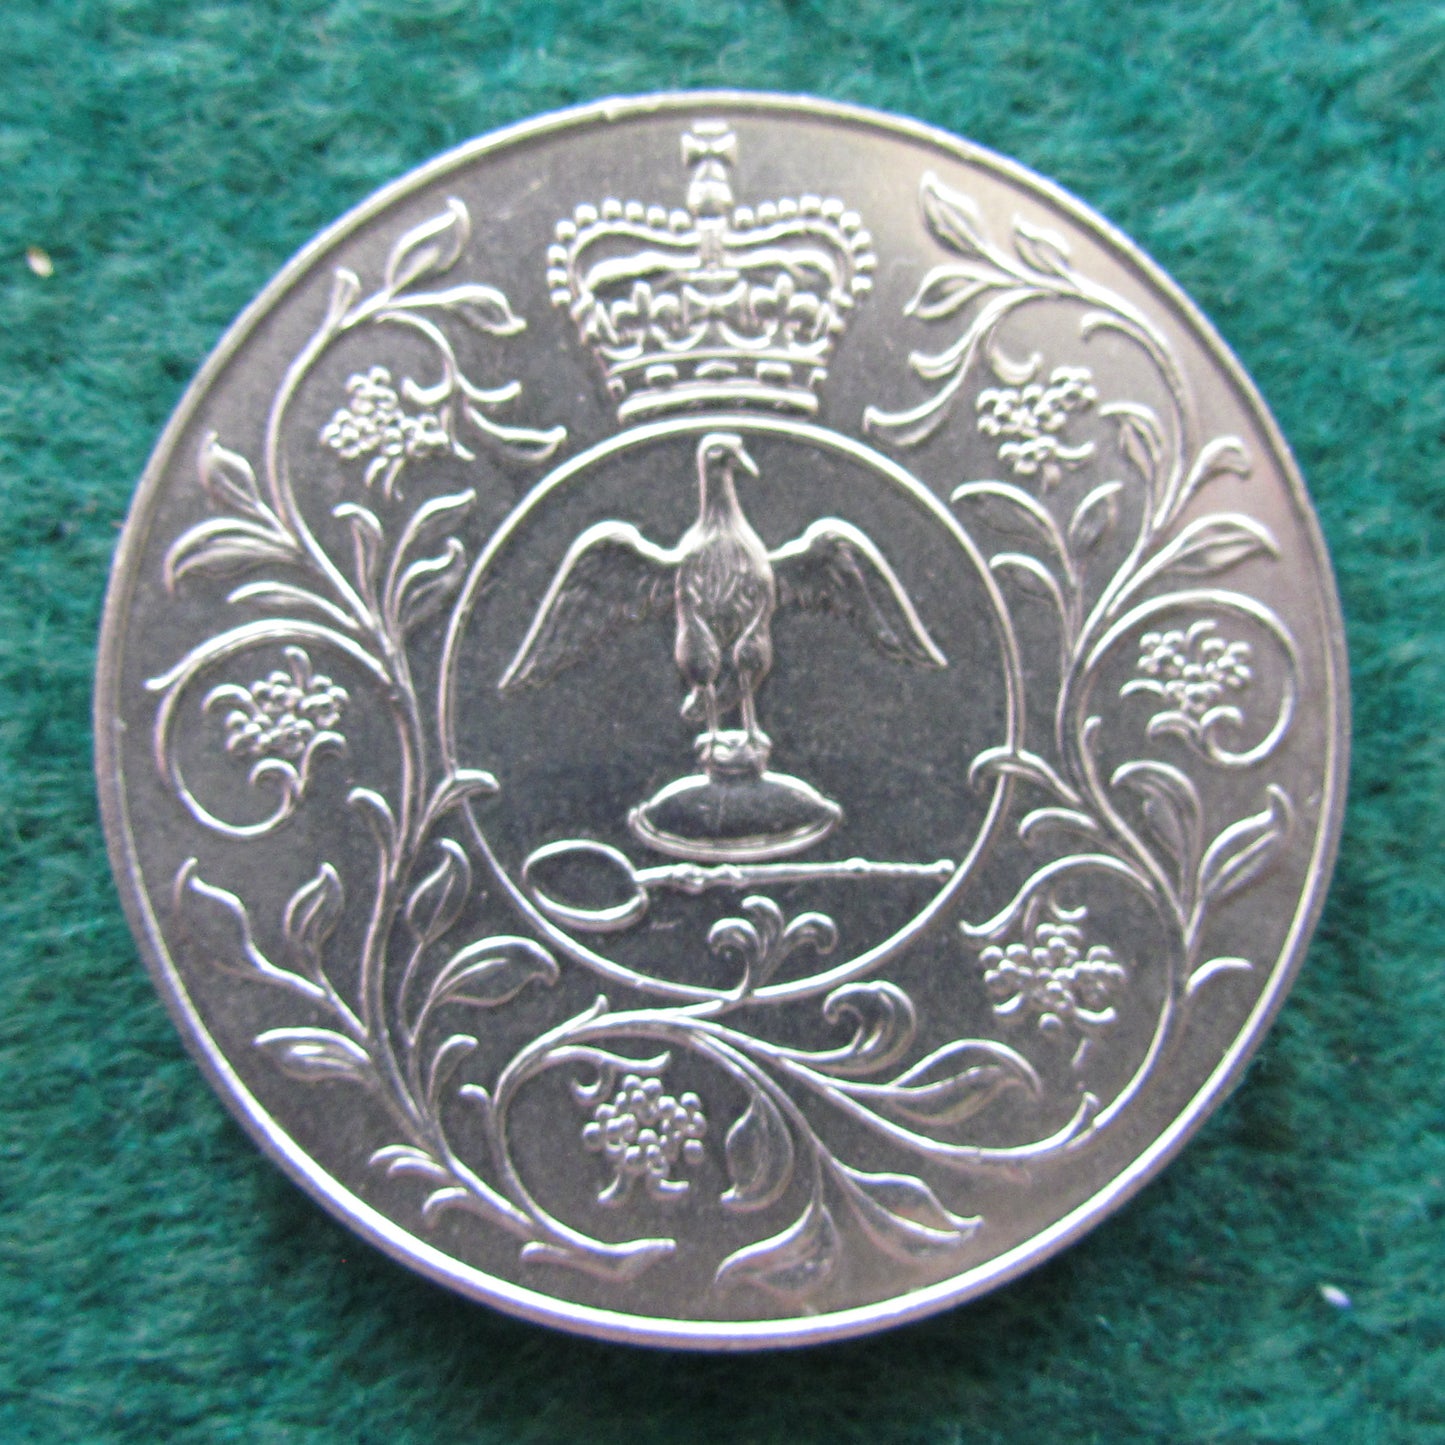 GB British UK English 1977 Silver Jubilee Commemorative Crown Queen Elizabeth II Coin